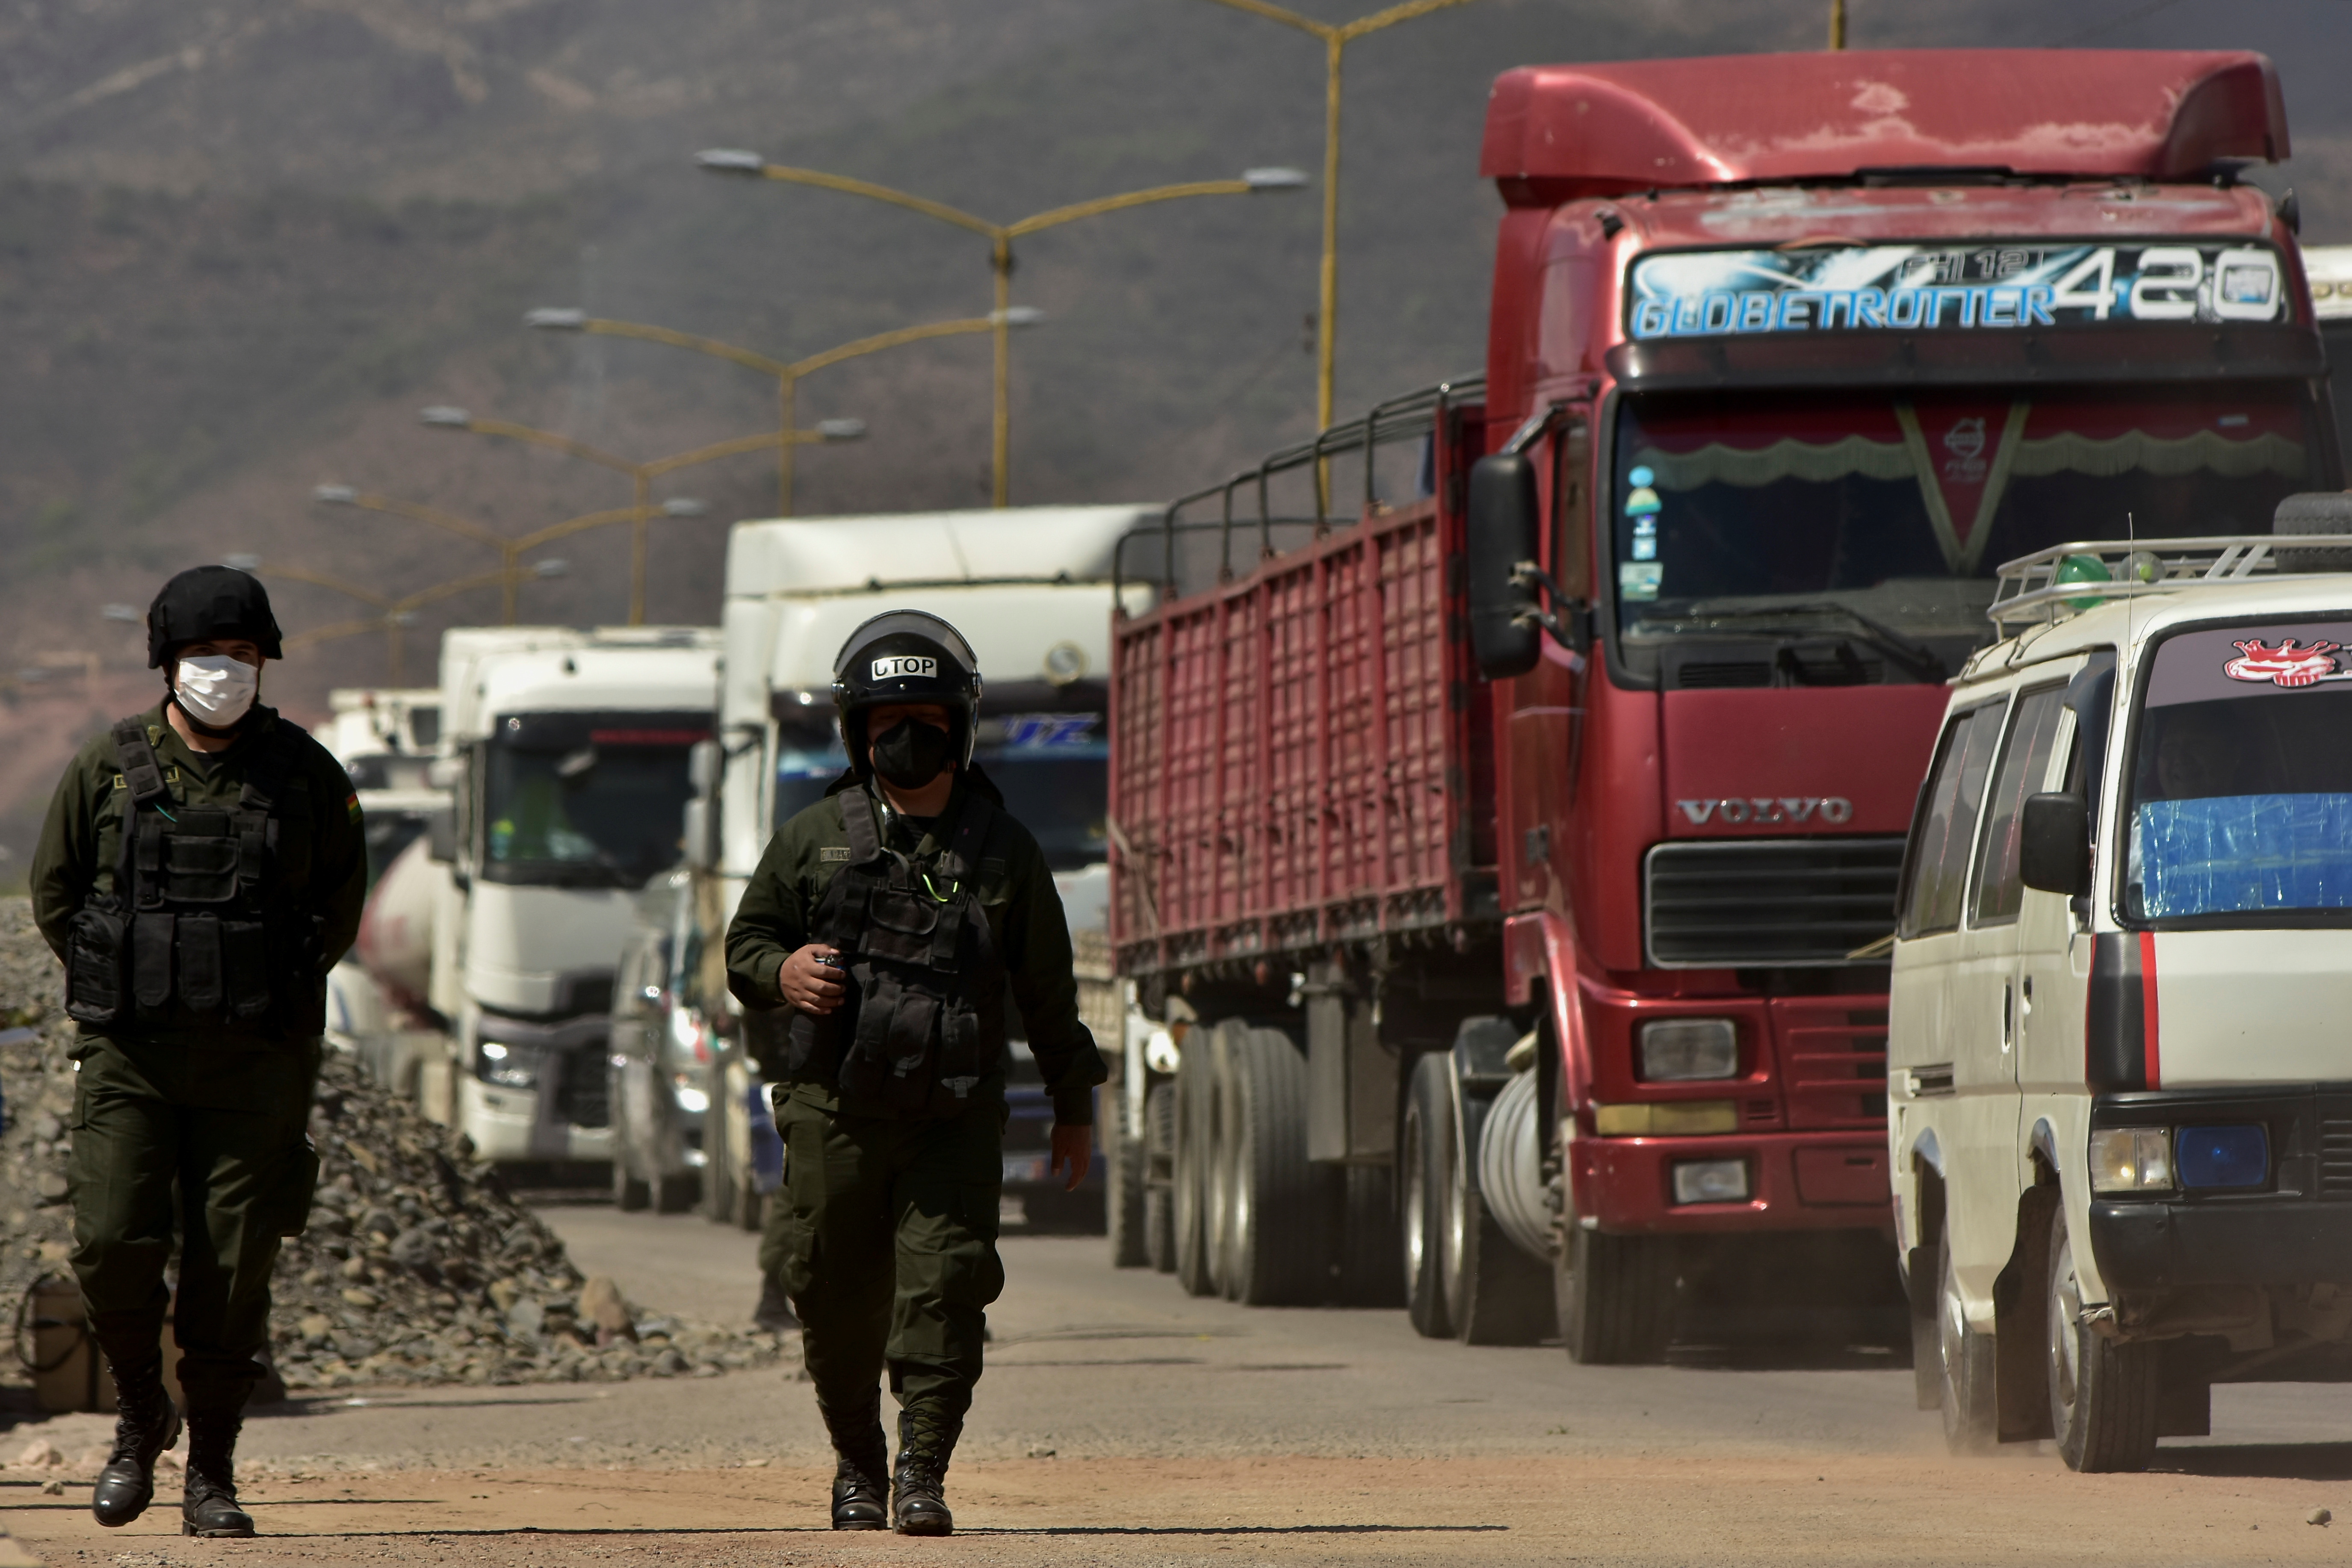 Bolivian demonstrators block highway as political tensions rise, in Suticollo